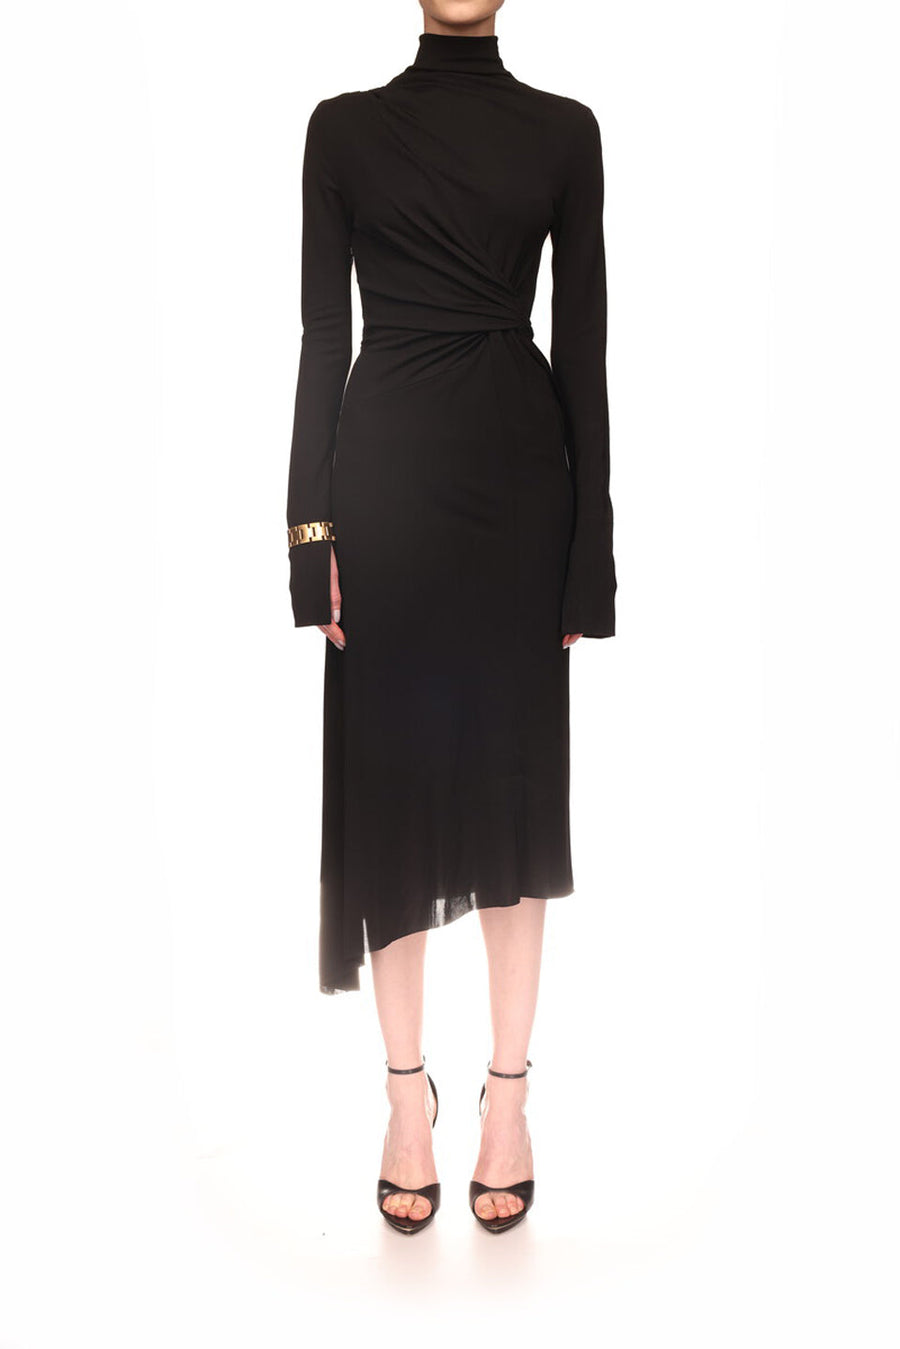 victoria beckham high neck asymmetric draped dress black figure front